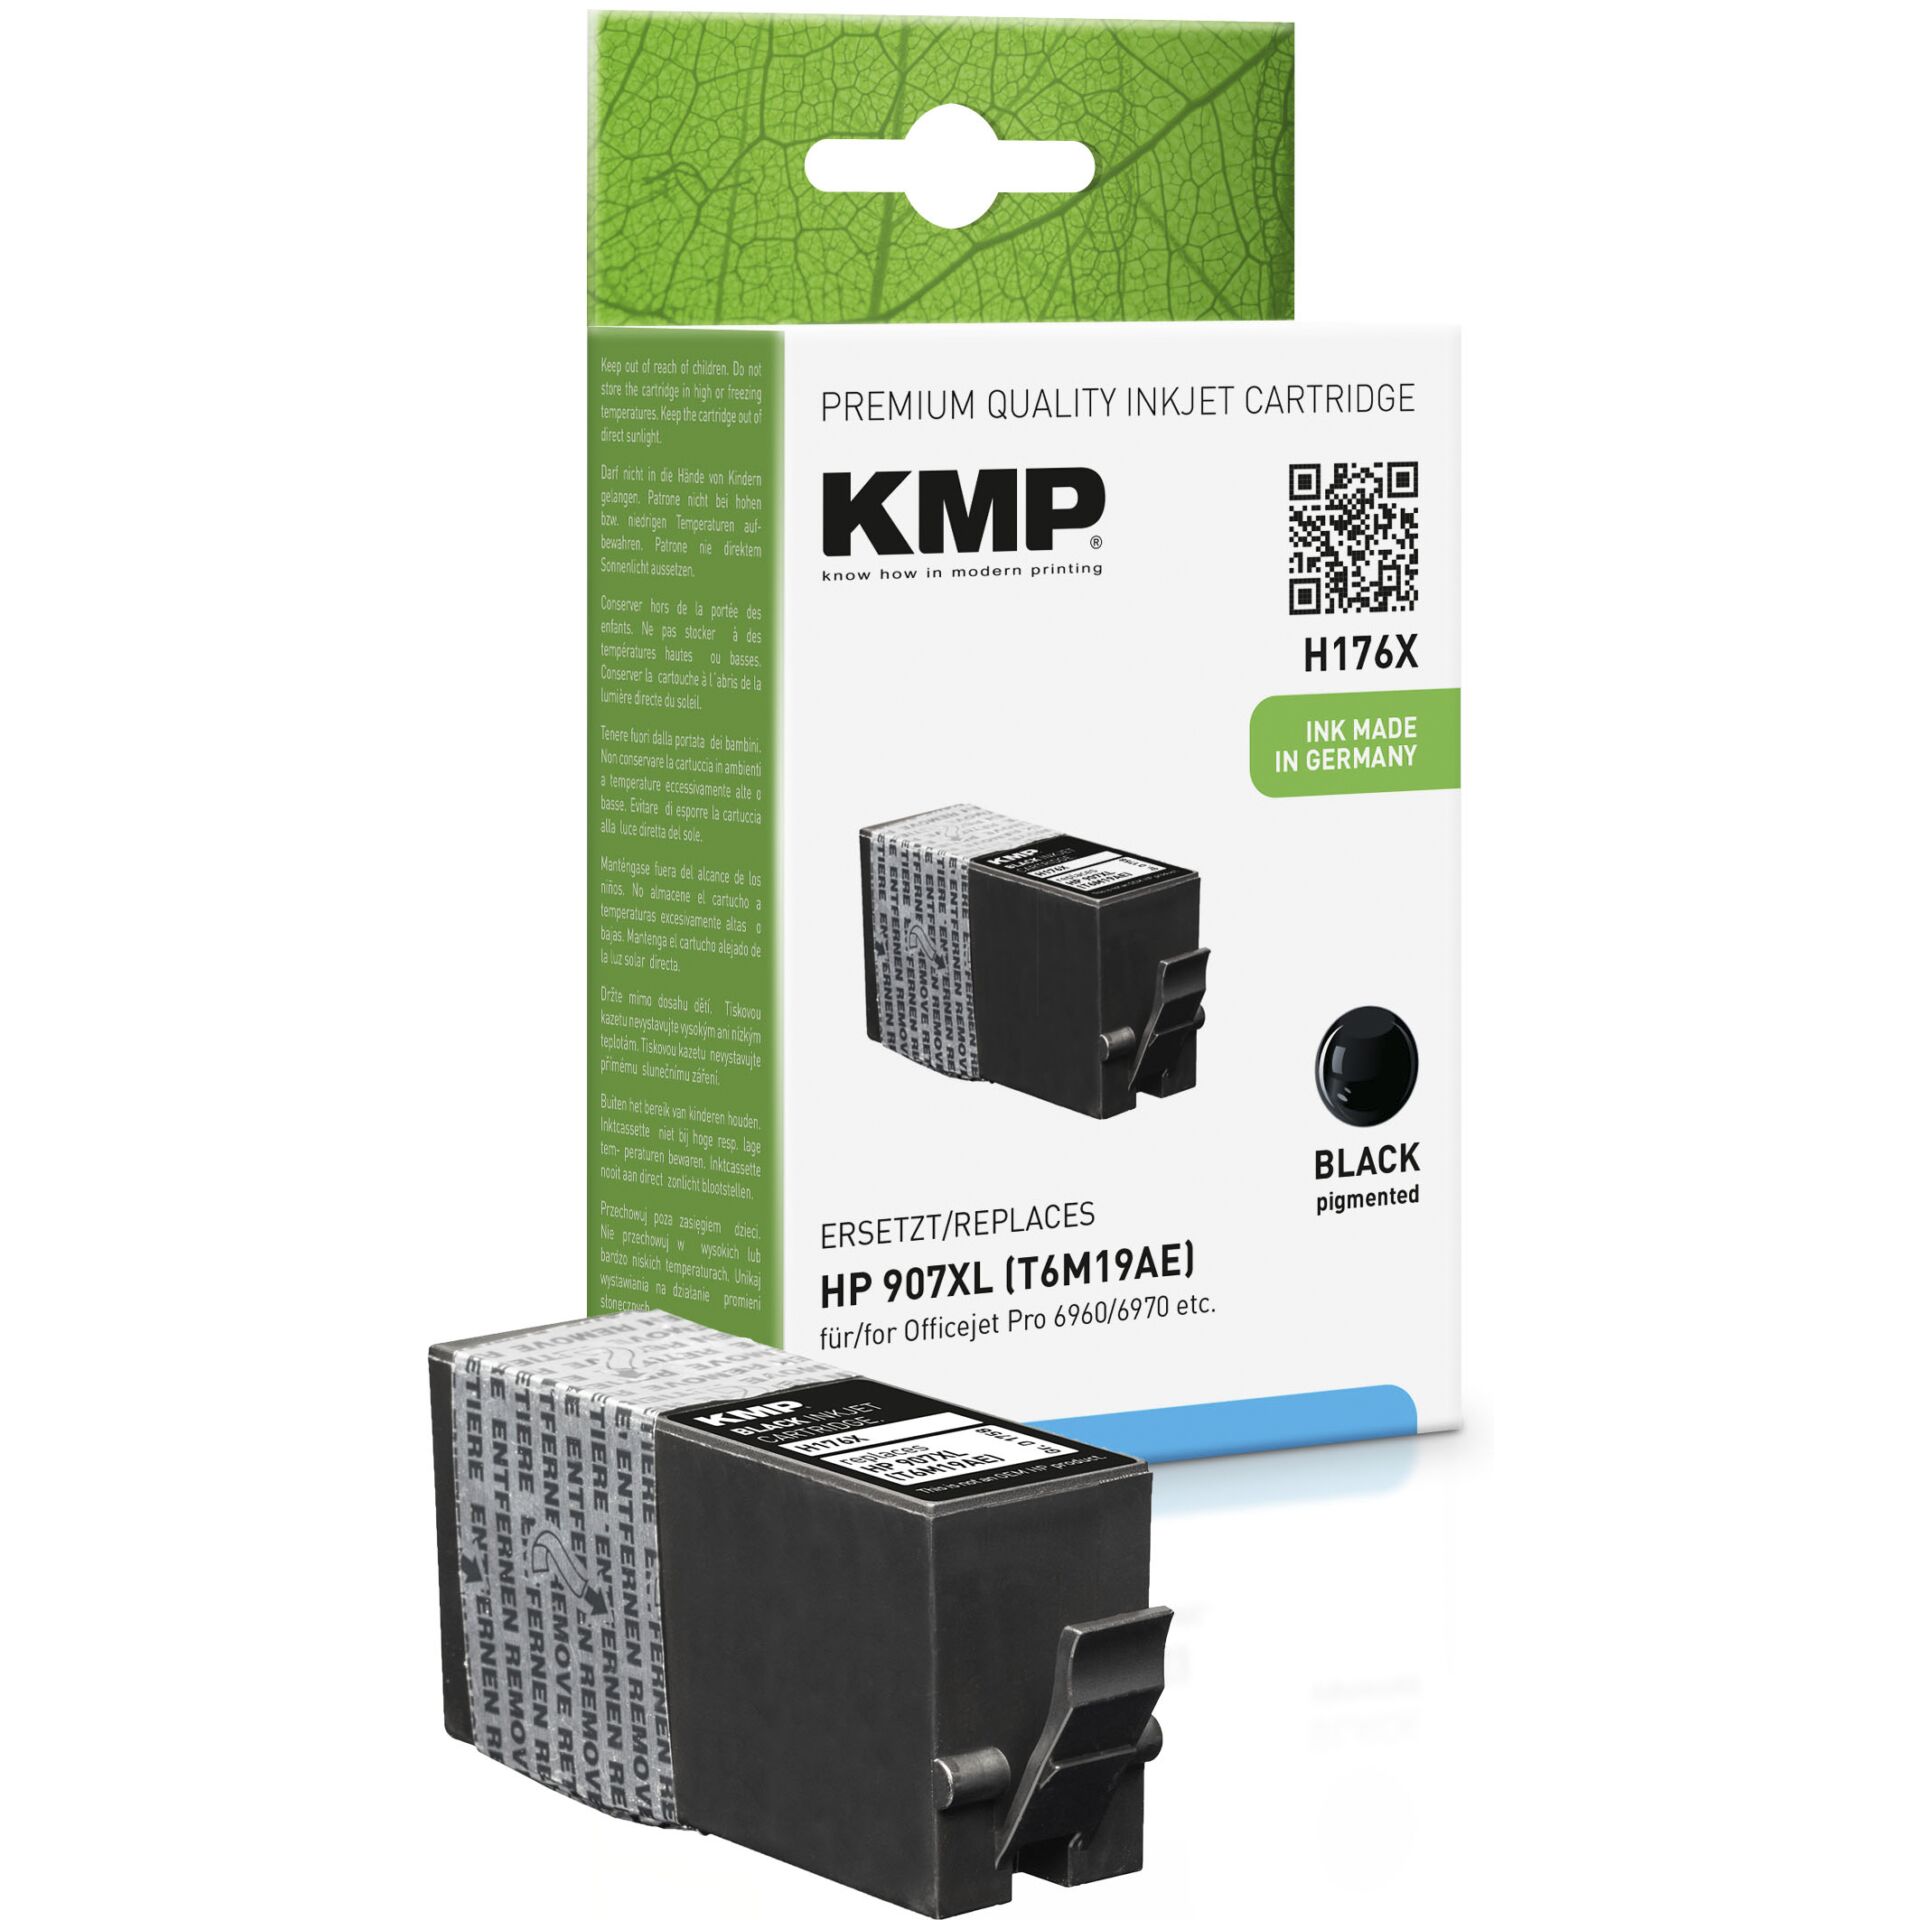 KMP H176X ink cartridge black for HP T6M19AE 907XL